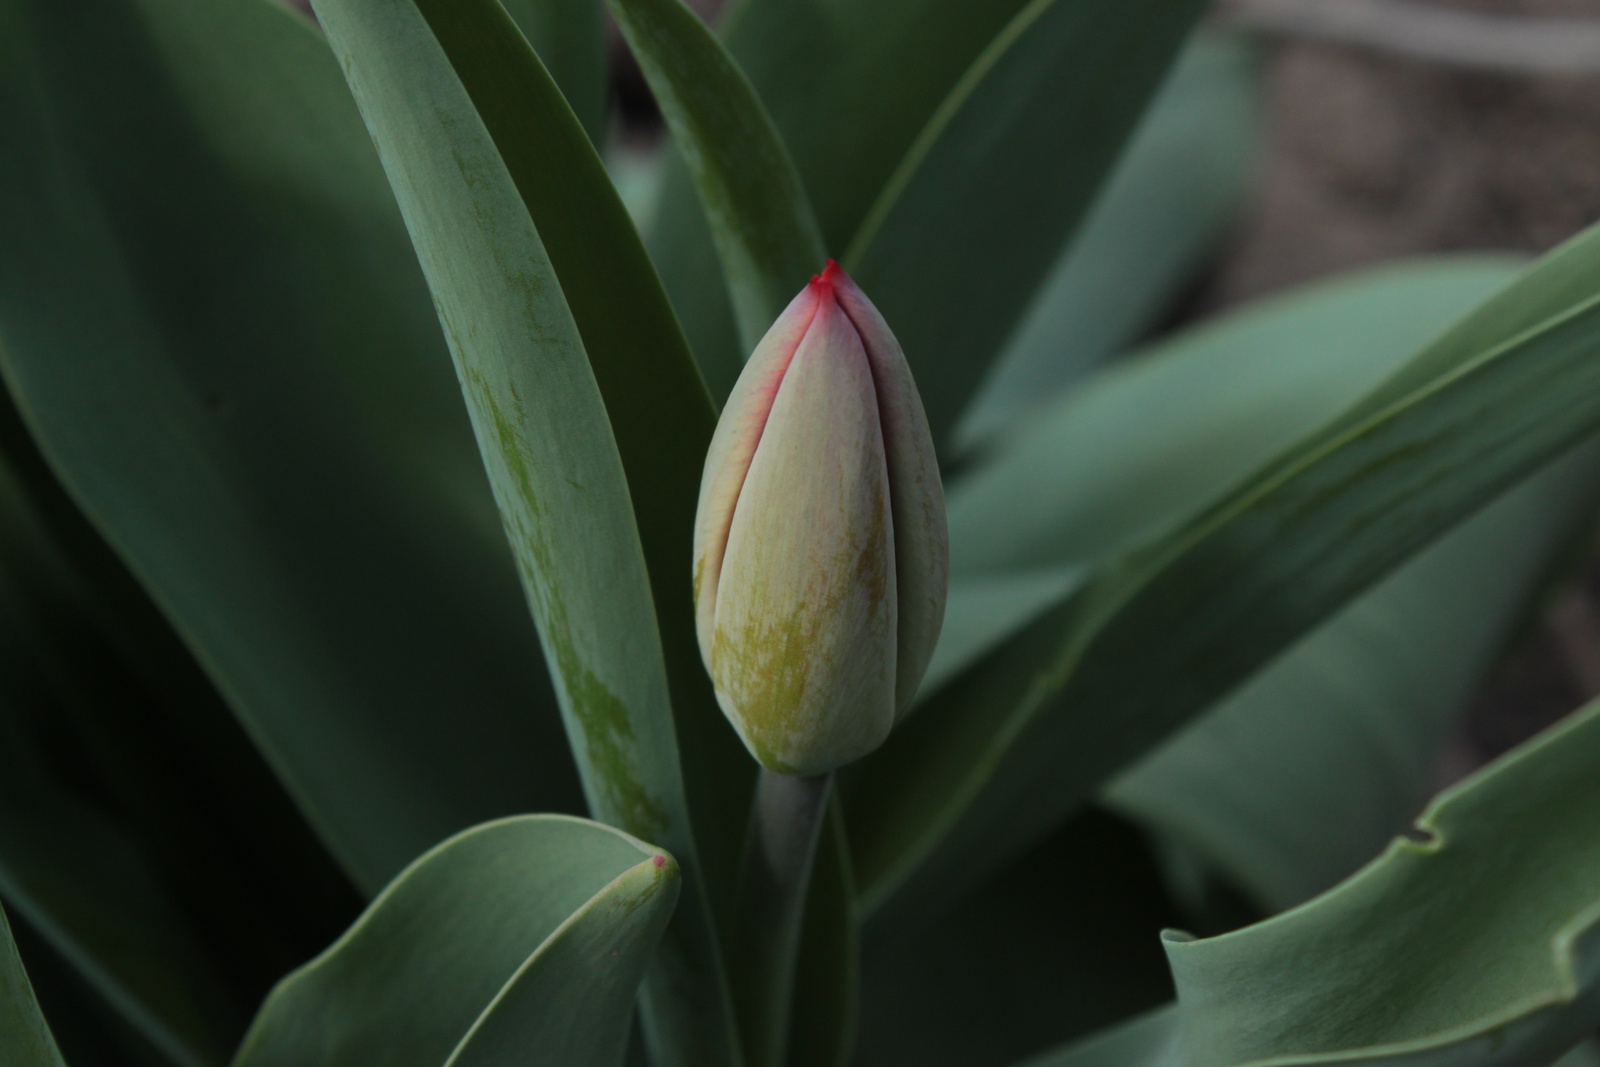 Hamvas tulipán bimbó